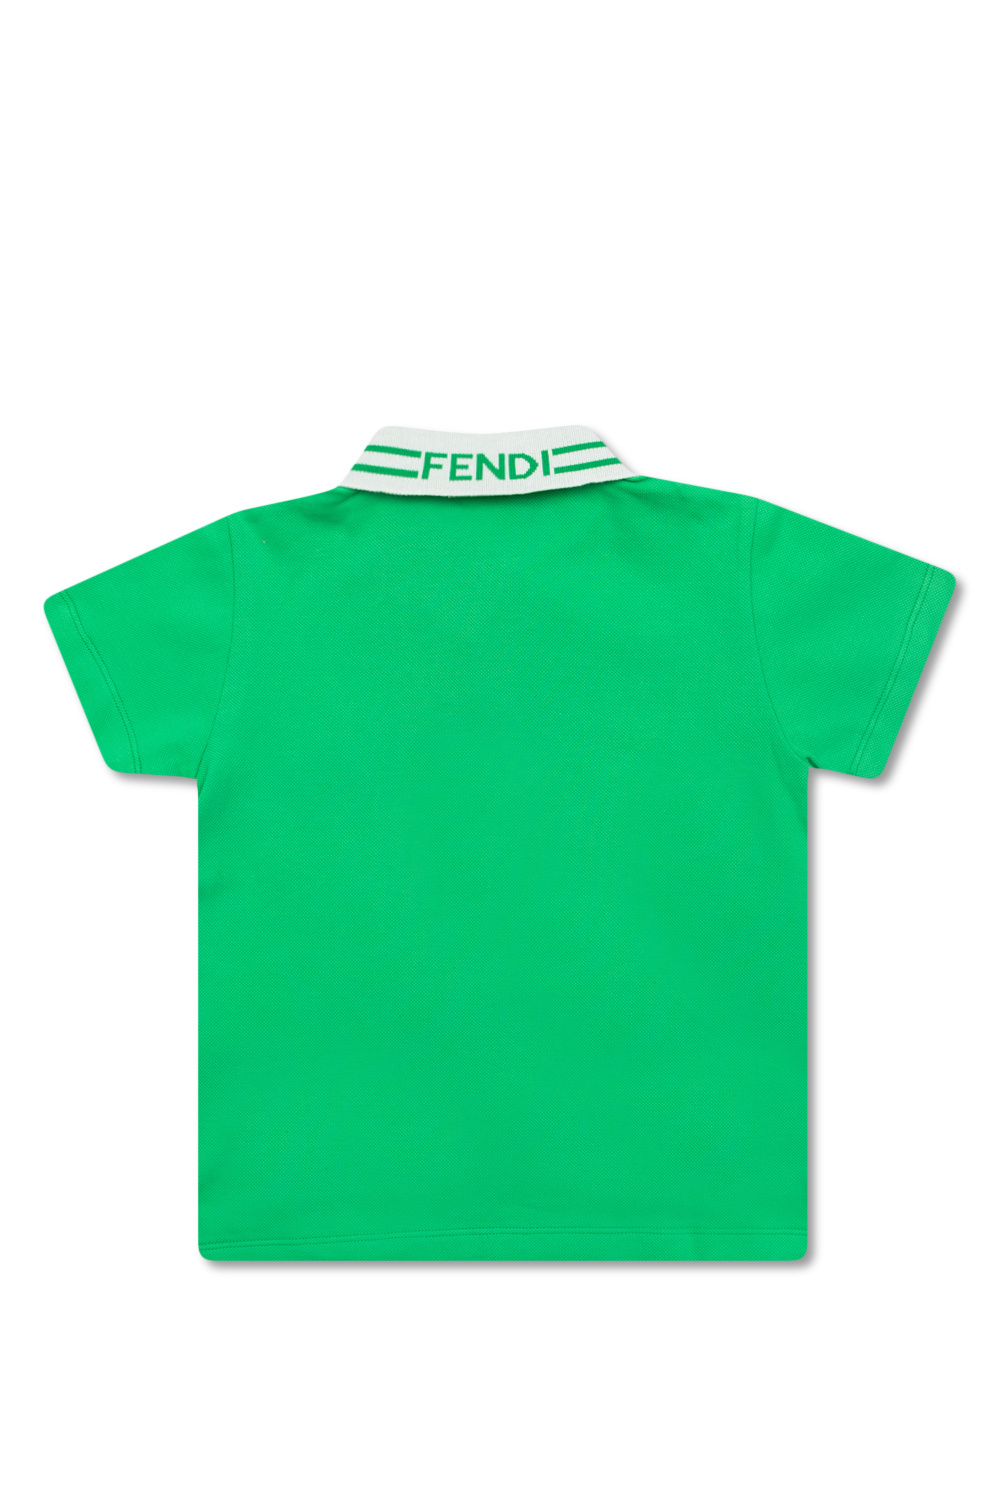 Fendi Kids wallets suitcases pens polo-shirts key-chains T Shirts